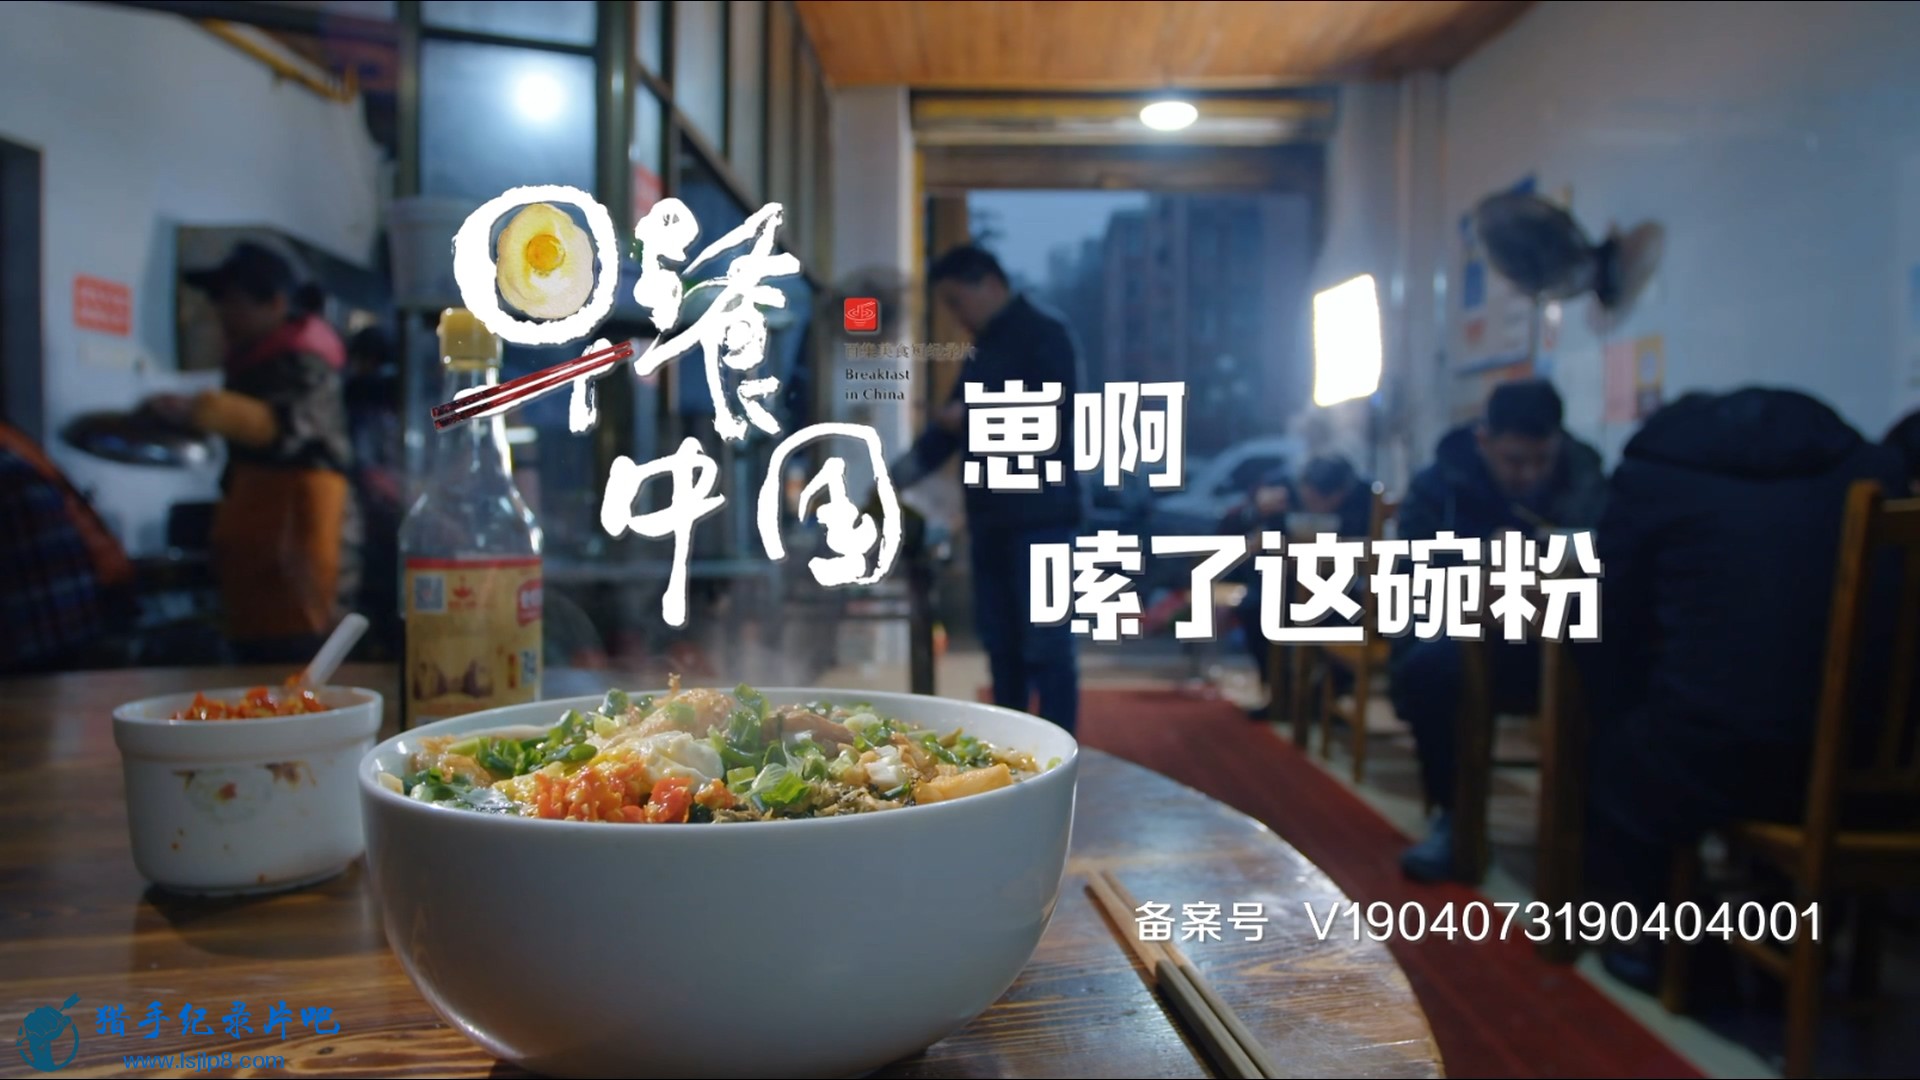 Breakfast in China.2019.EP01.WEB-DL.1080p.HEVC.AAC-HQC.mp4_20190914_091336.517.jpg